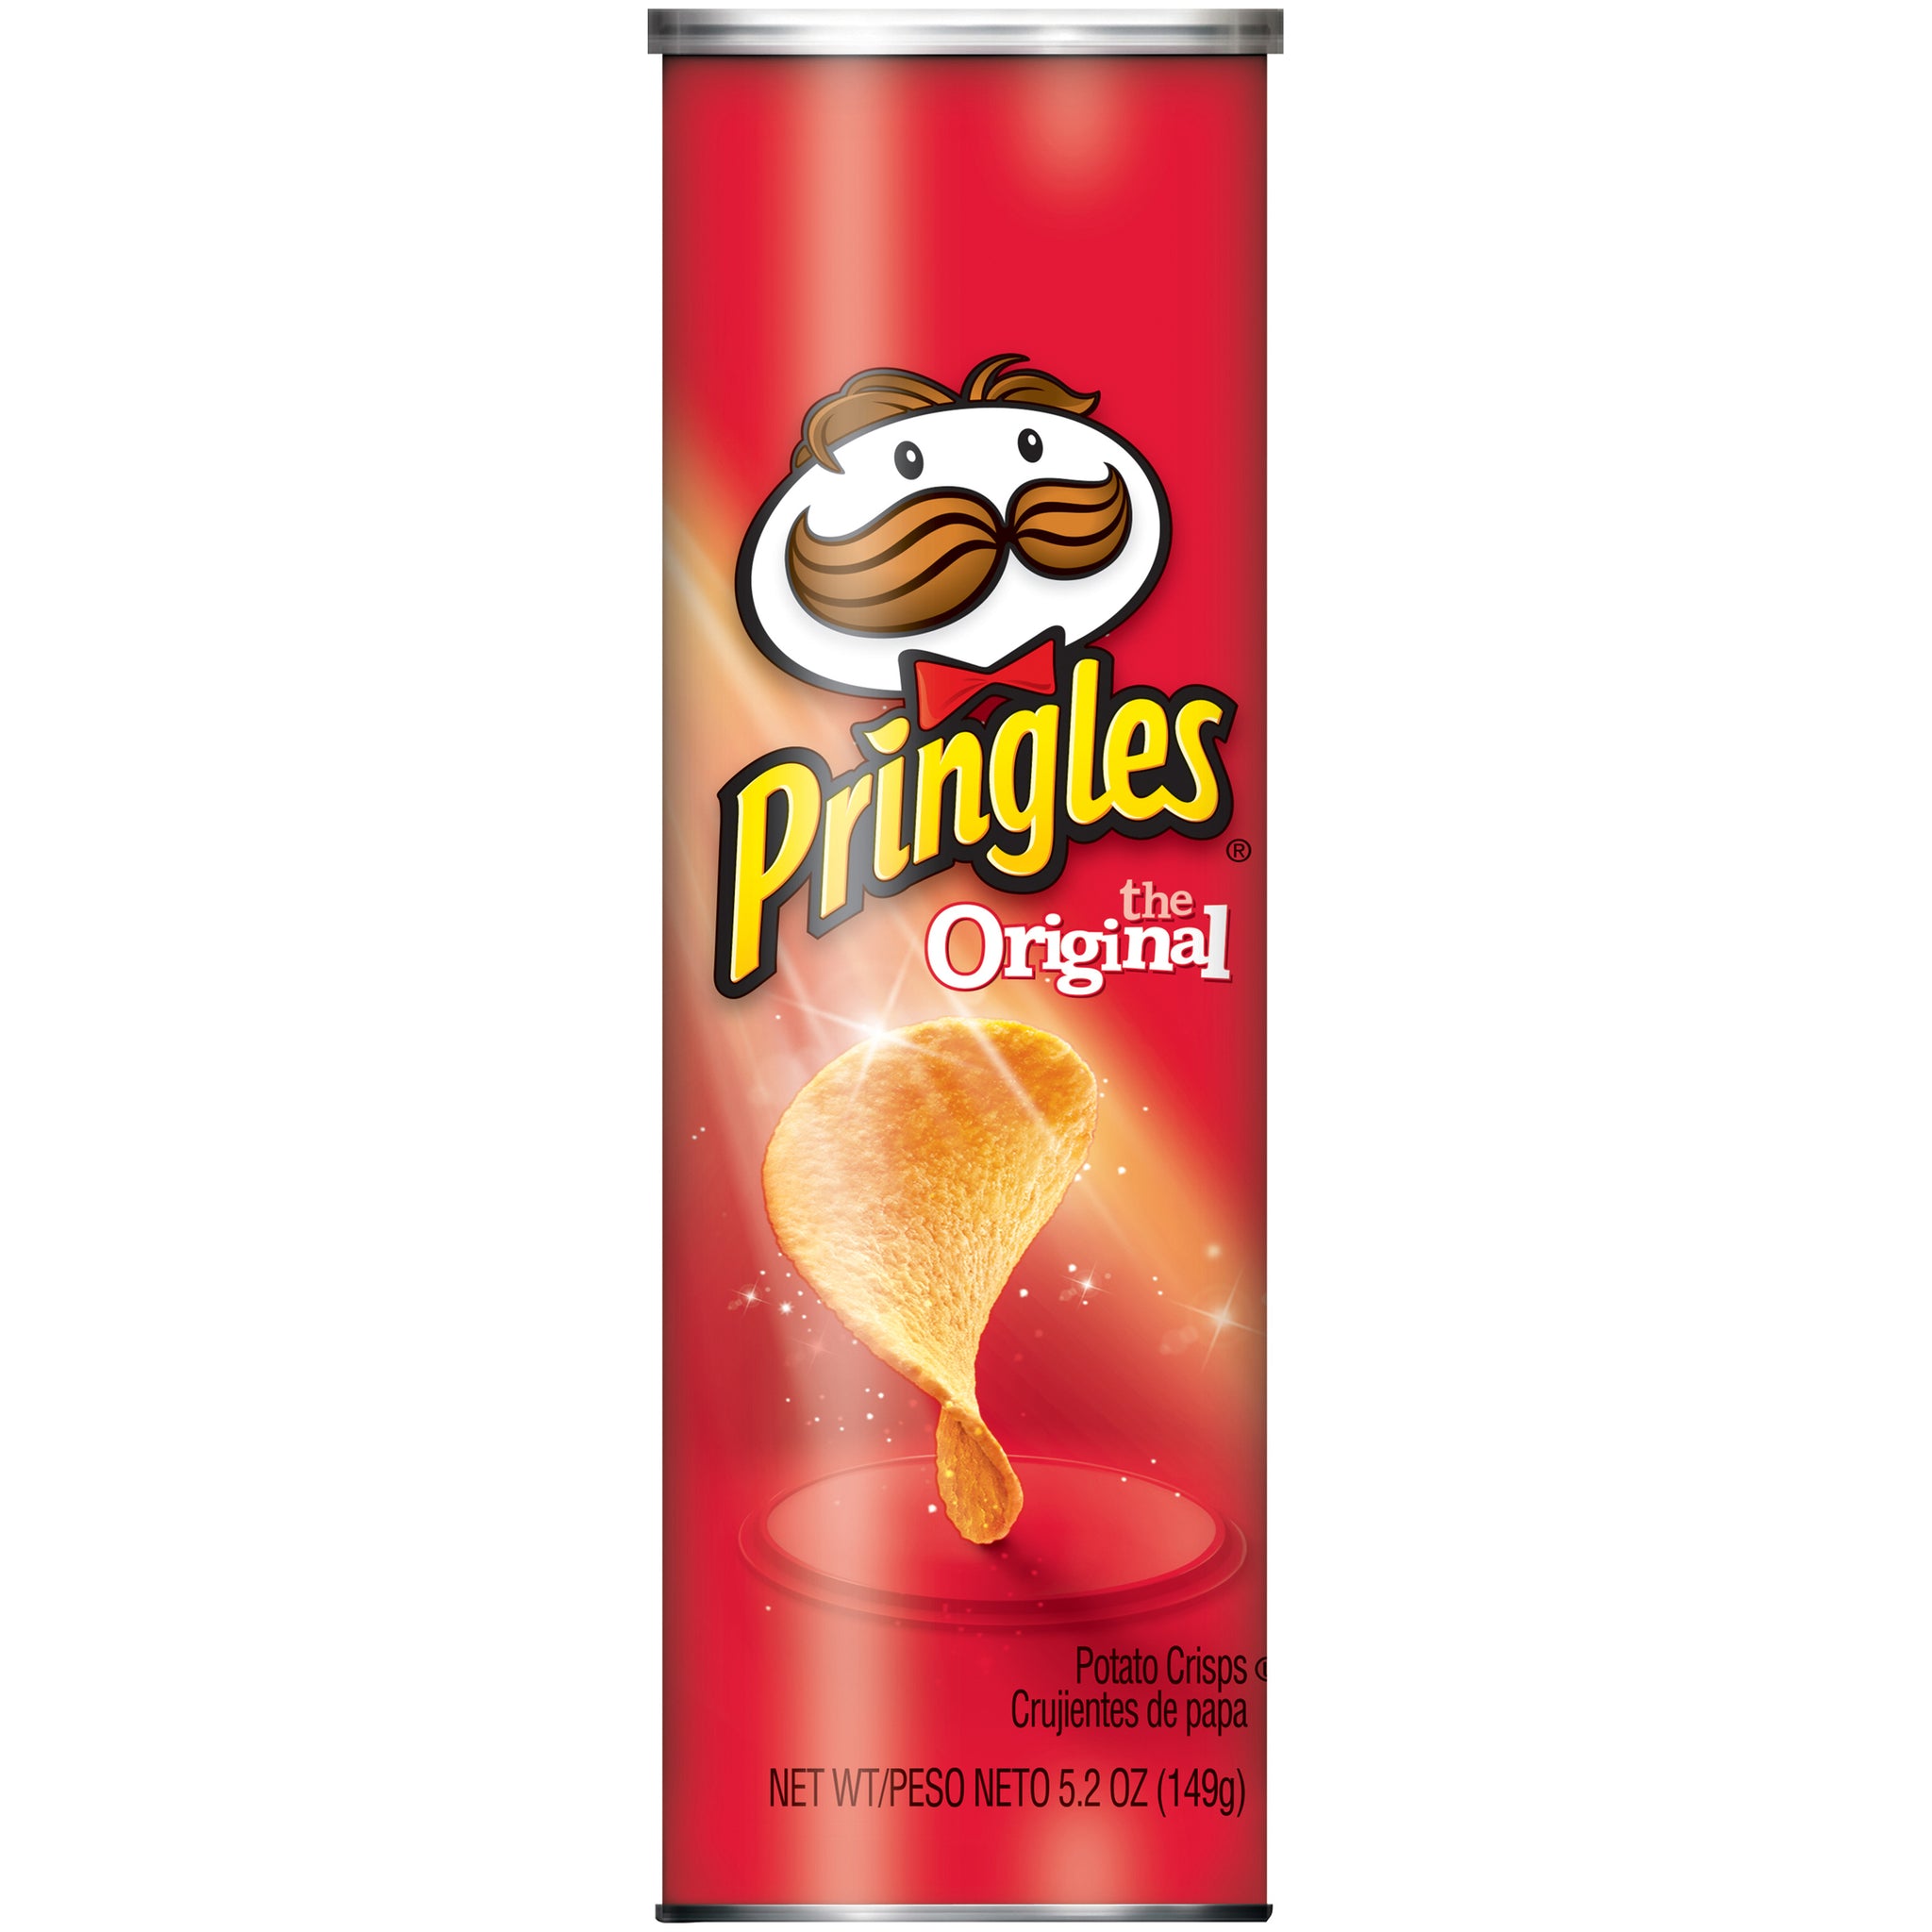 tha>Pringles - Original potato chips can